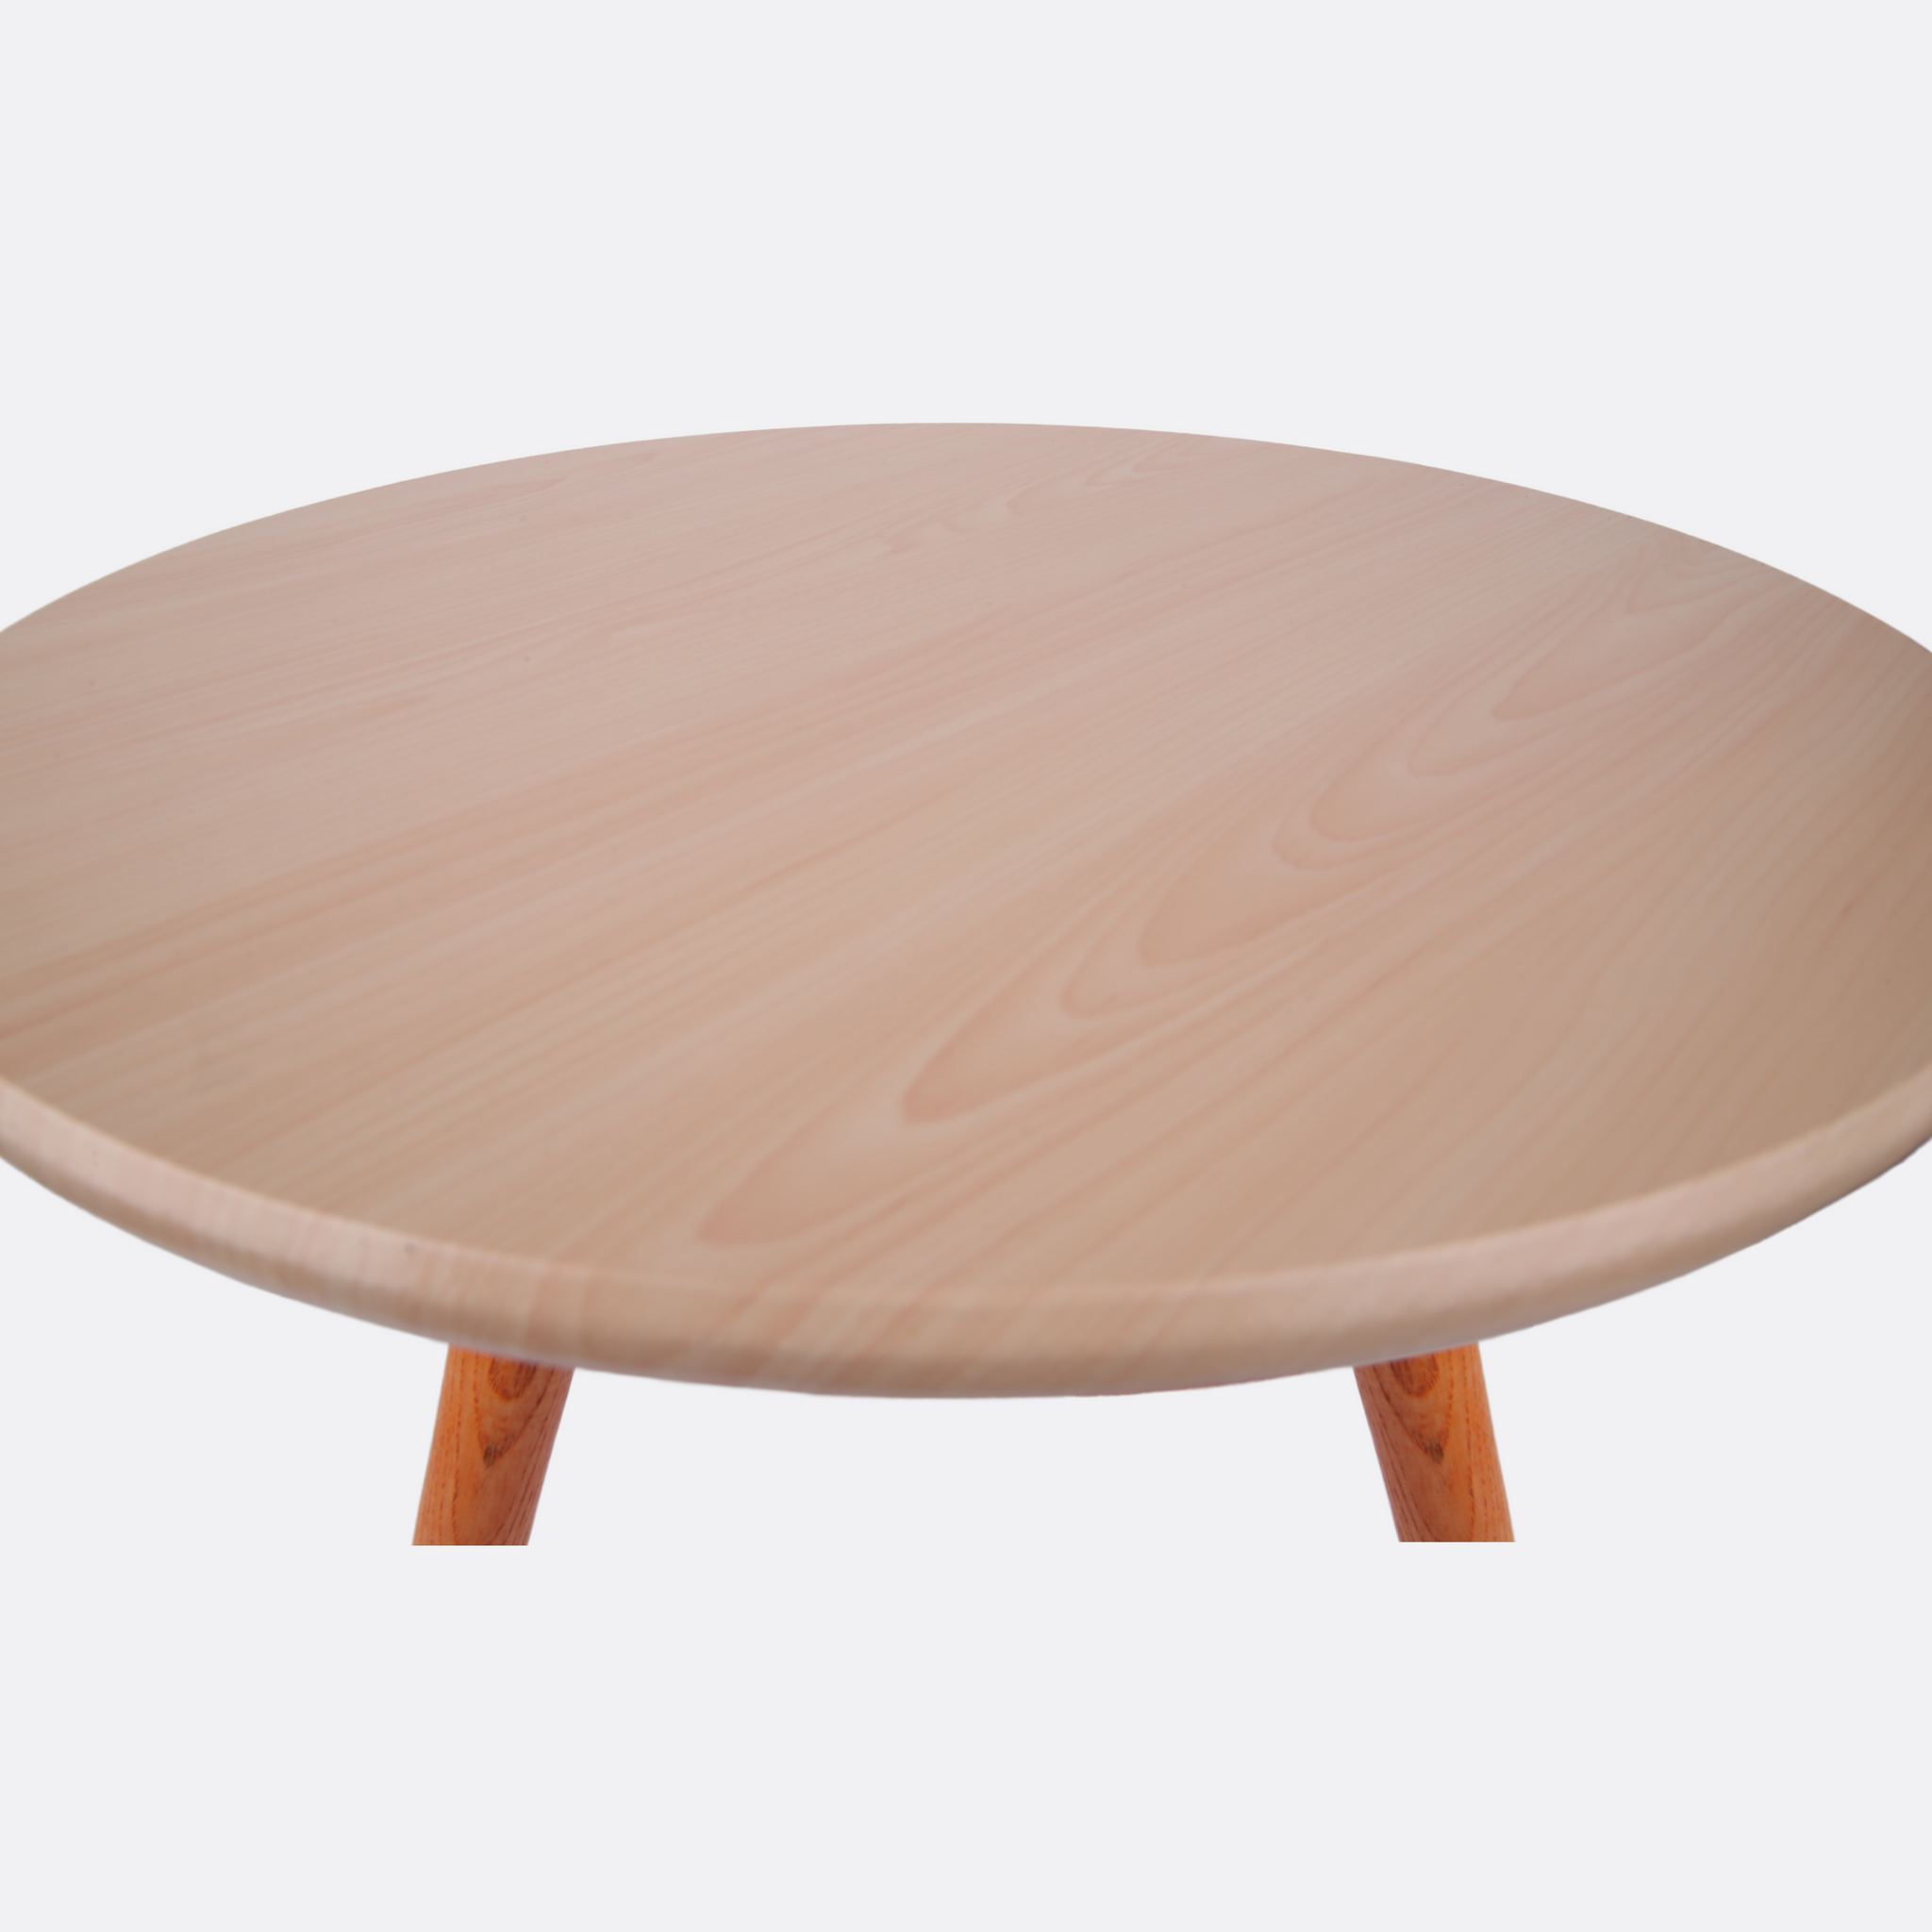 3 legged Wooden Coffee table